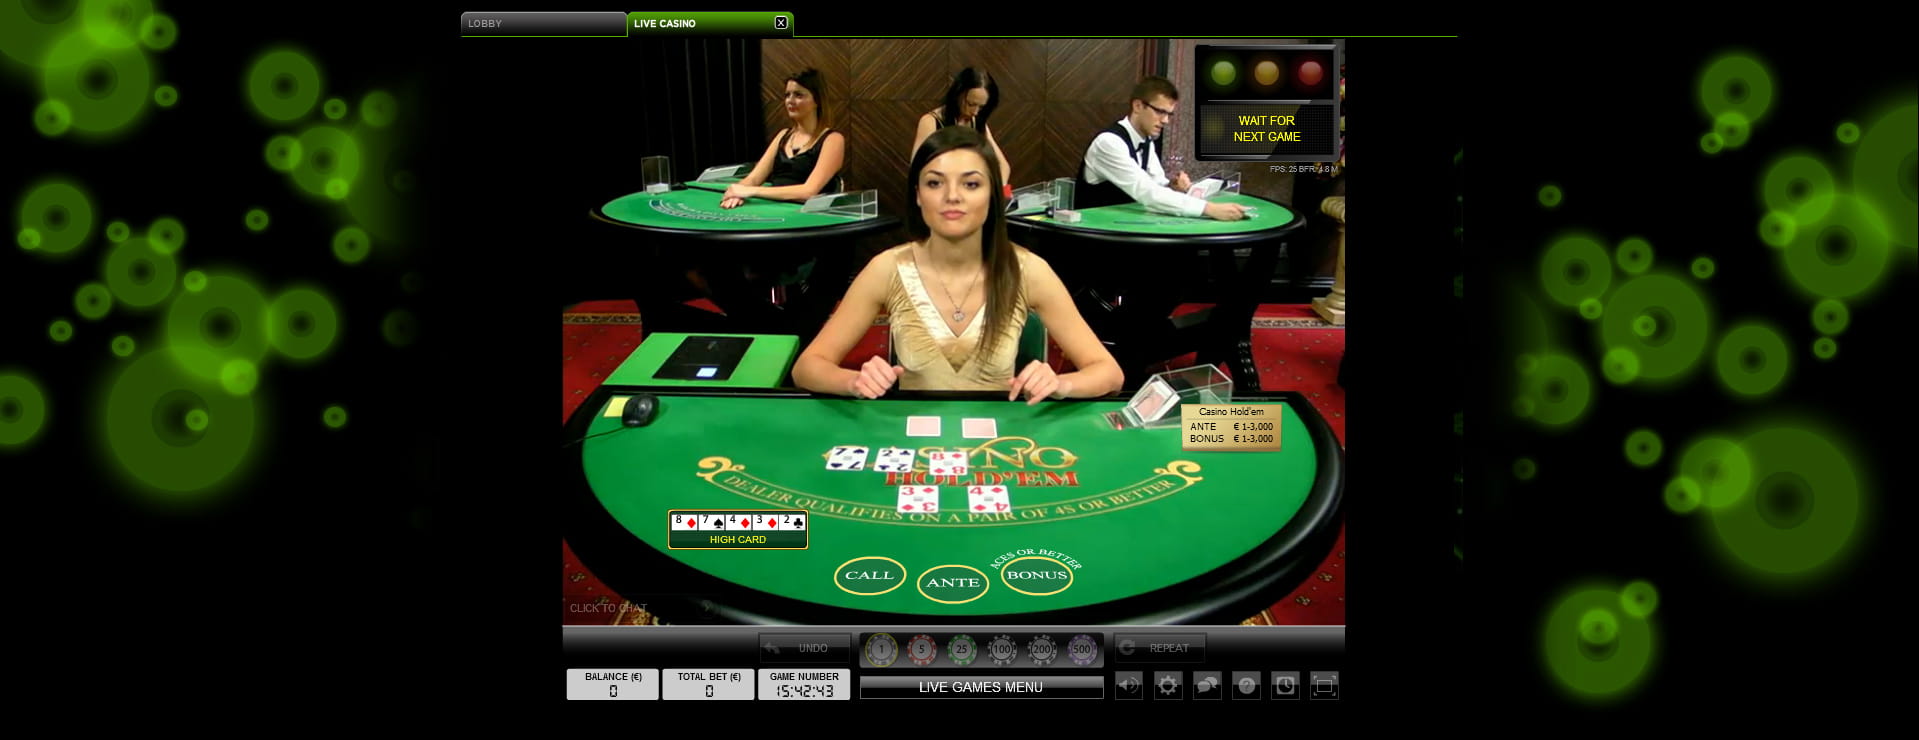 Live Dealers Online Casino